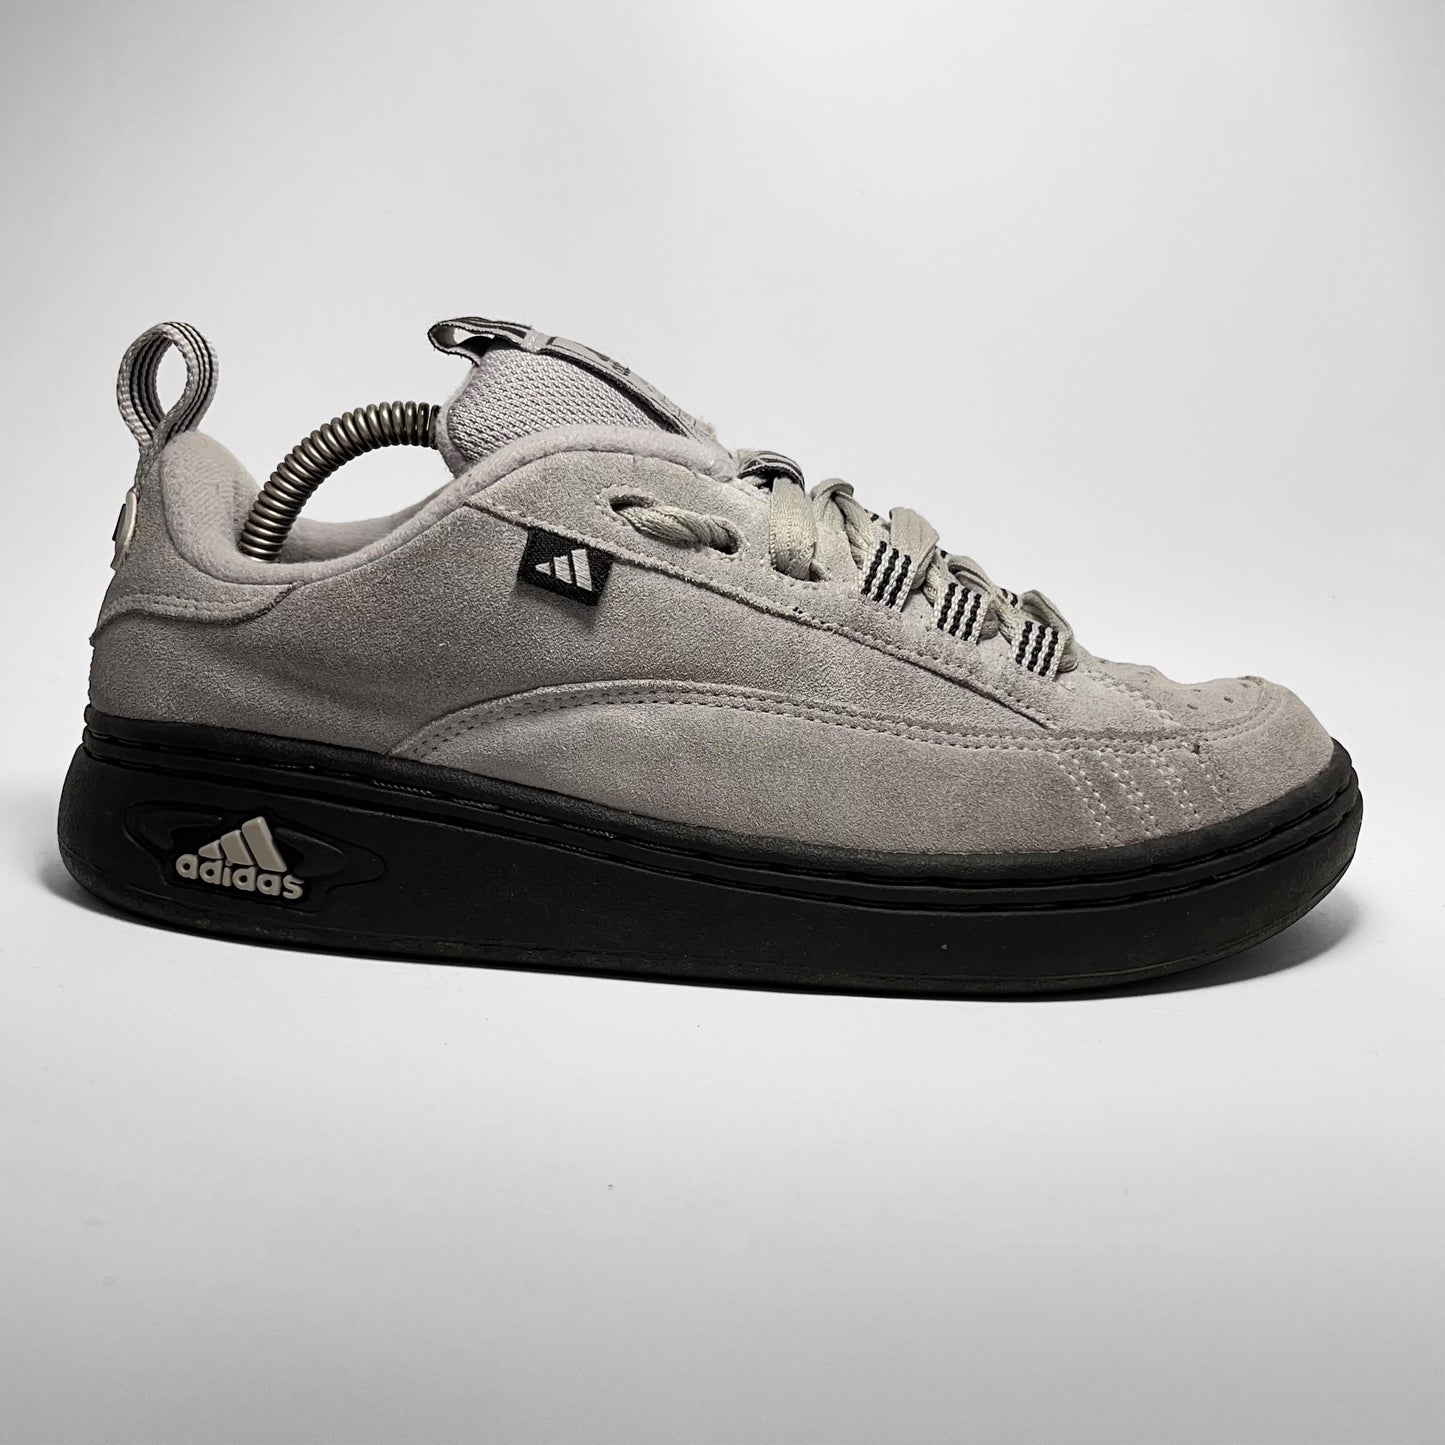 Adidas Suede Skate Shoes (2000)